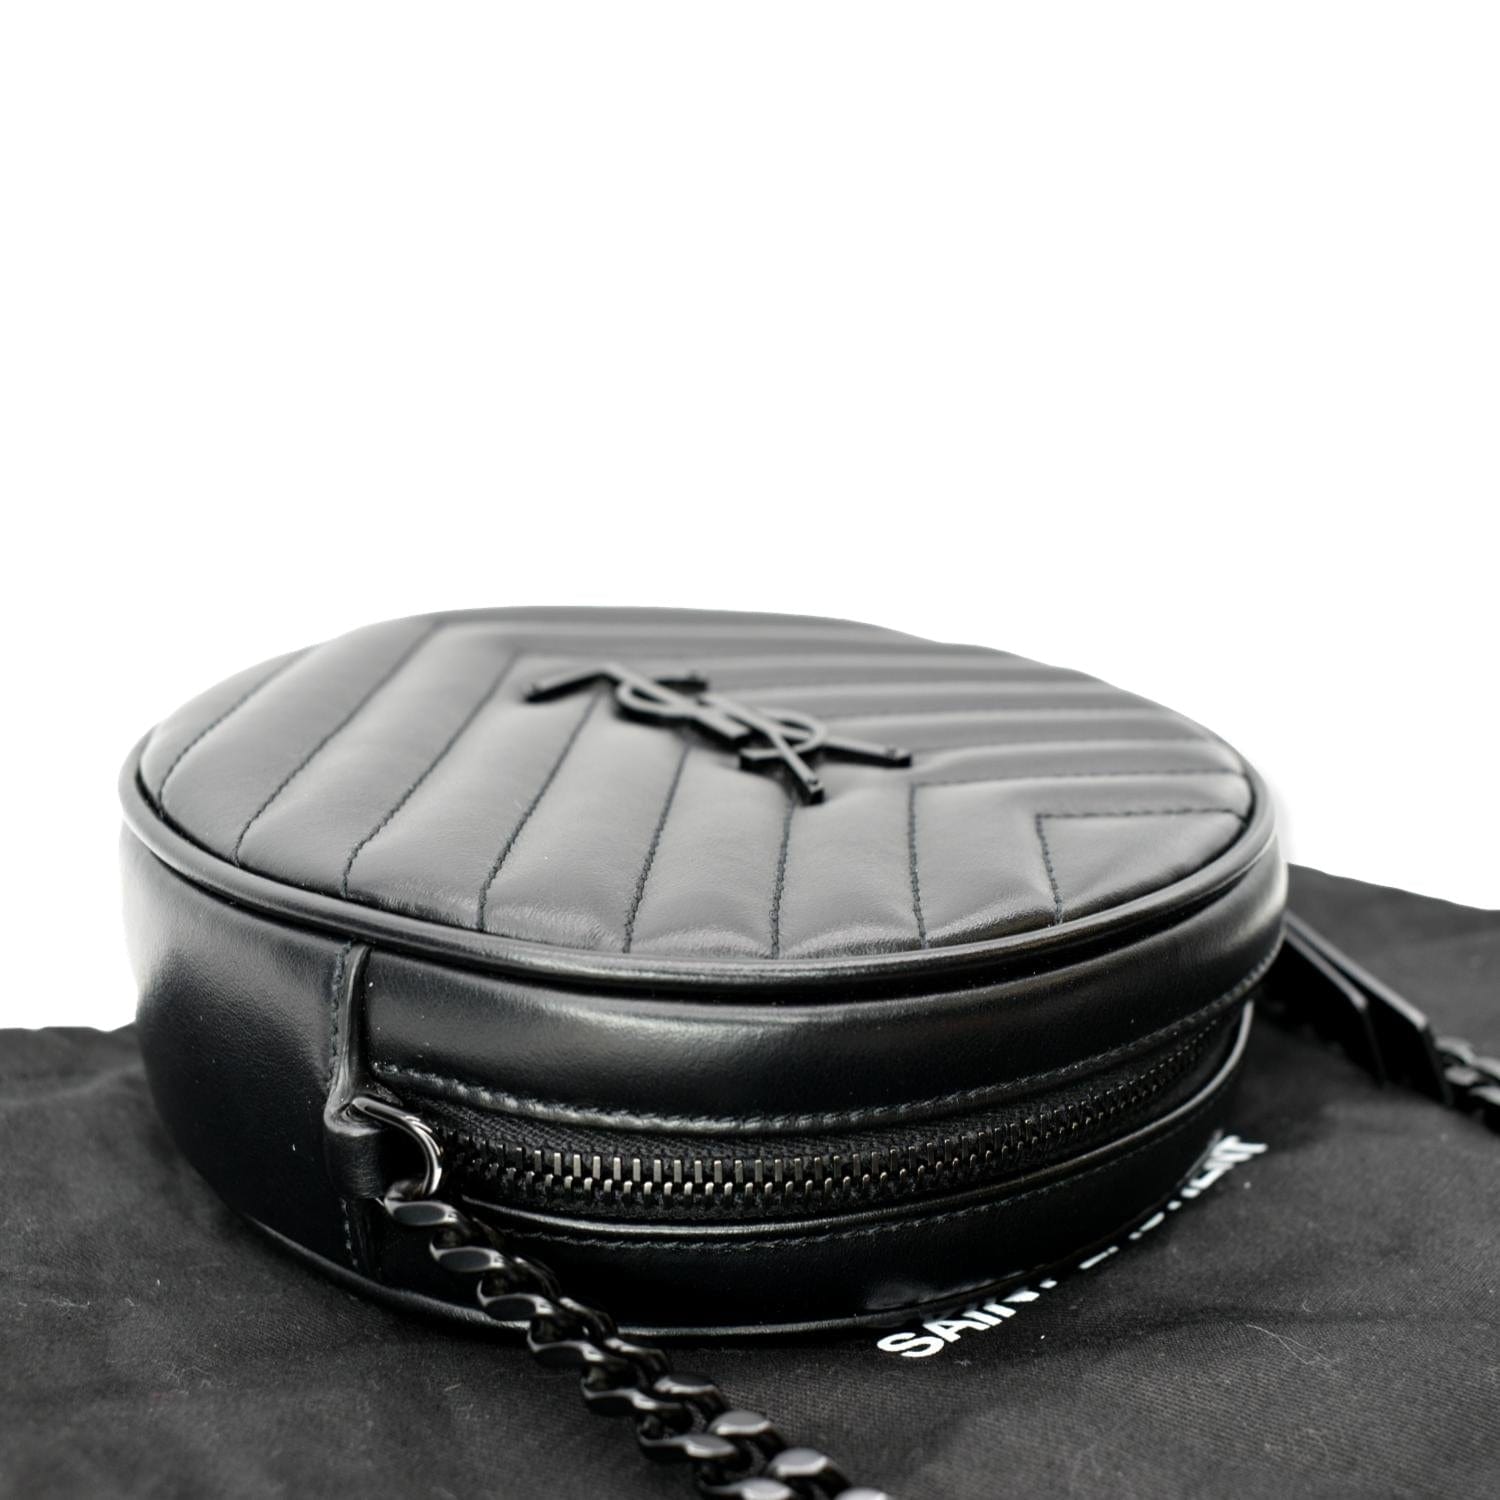 Vinyle leather crossbody bag Saint Laurent Black in Leather - 27453709